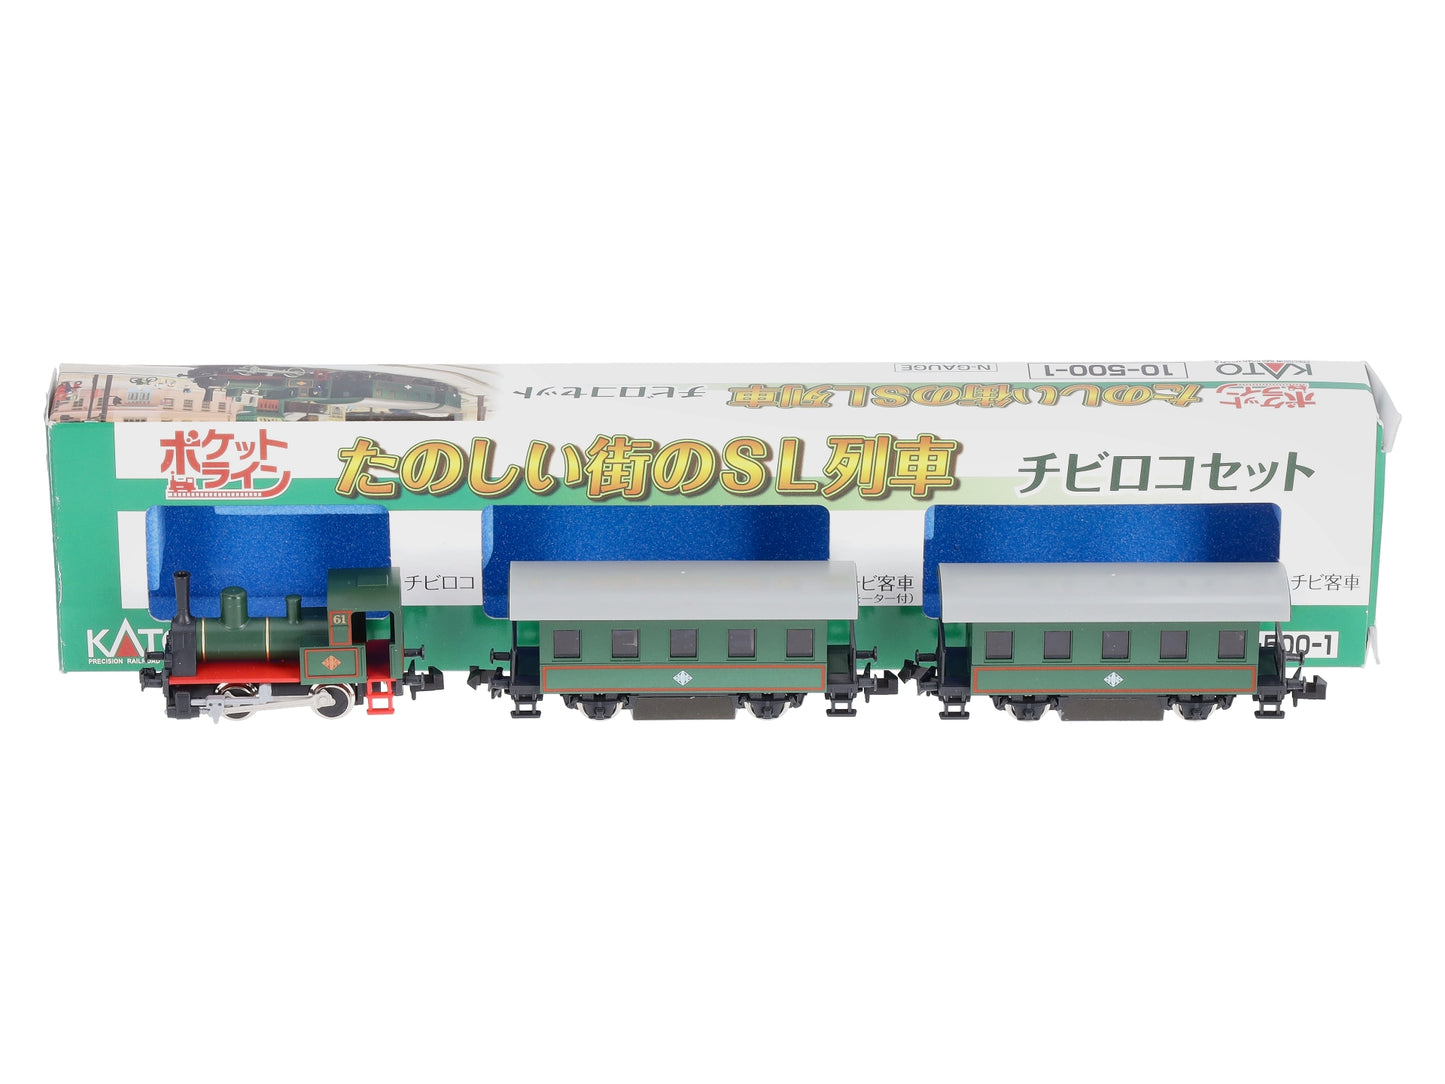 Kato 10-500-1 Pocket Line Train-Only Set - Standard DC